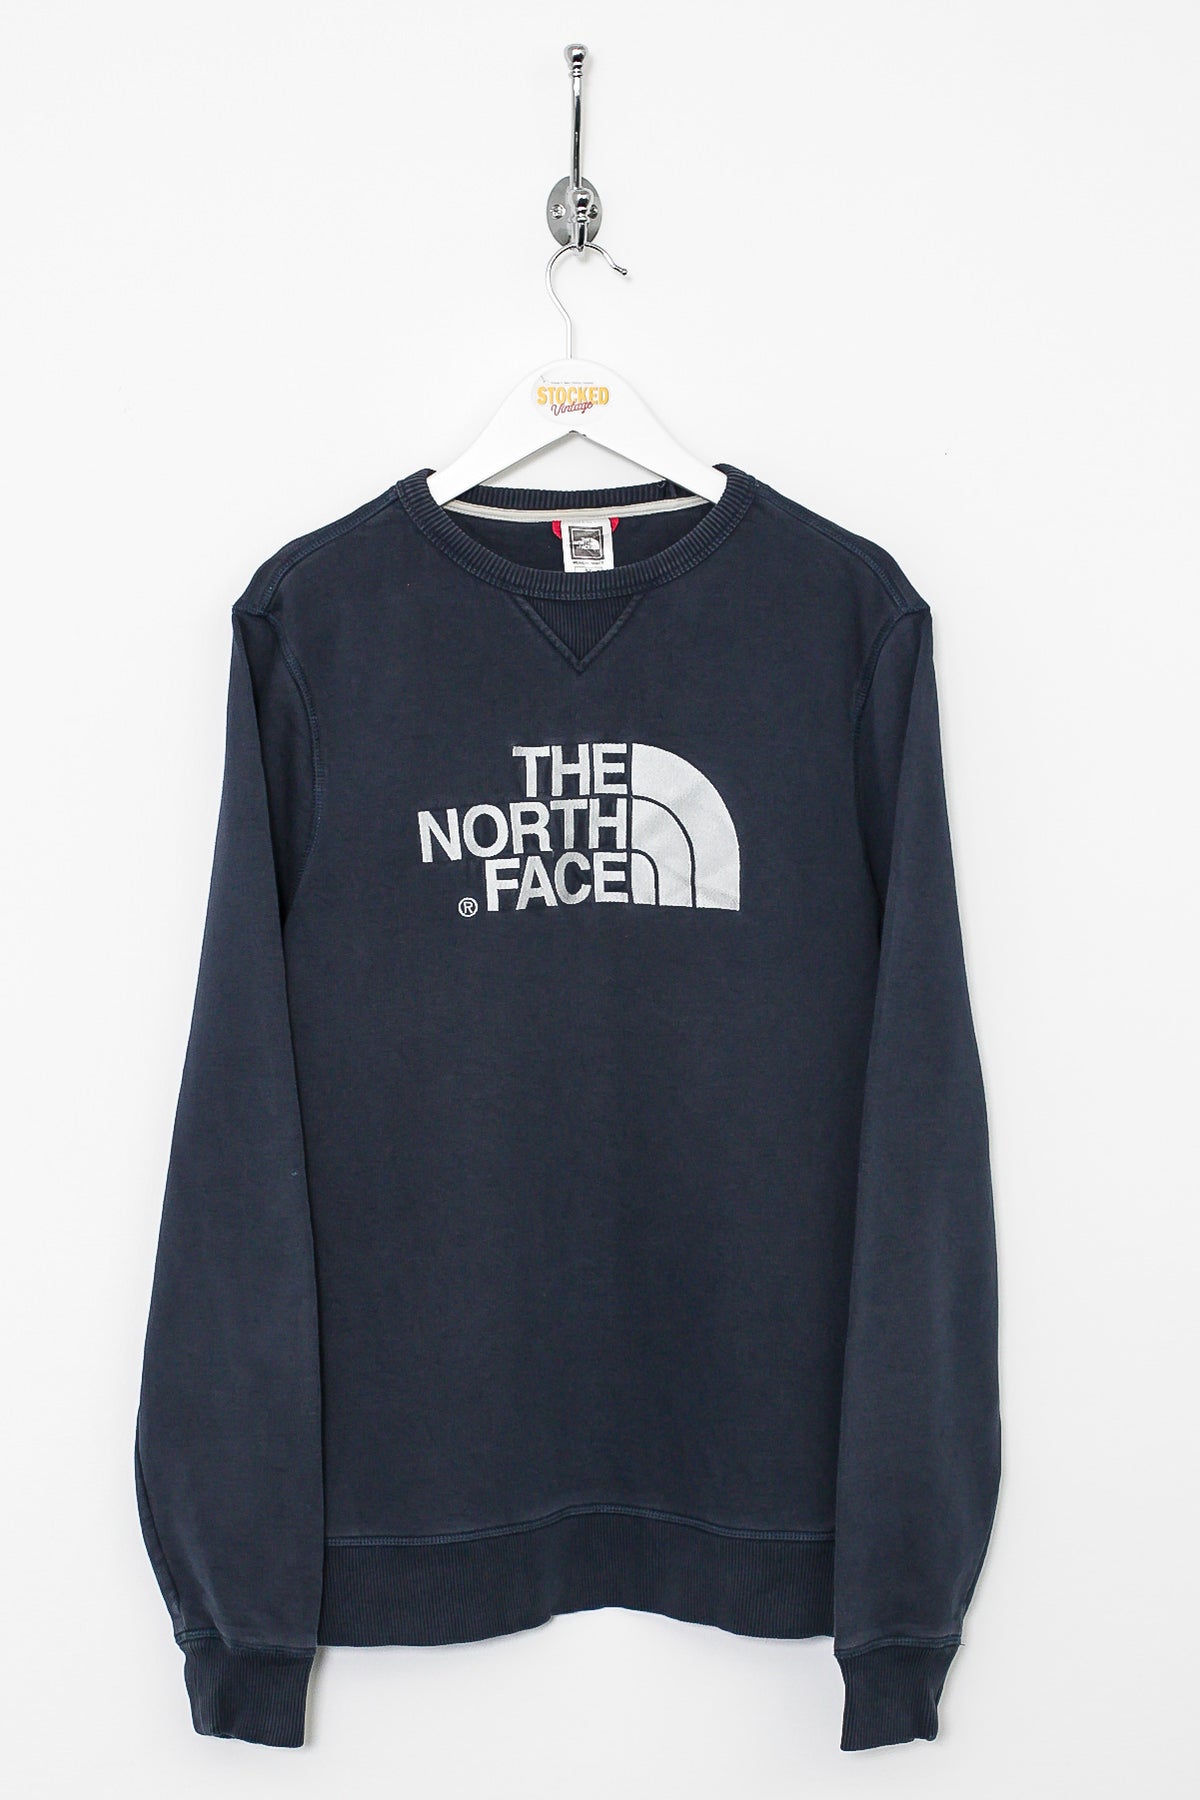 The North Face Sweatshirt (S)